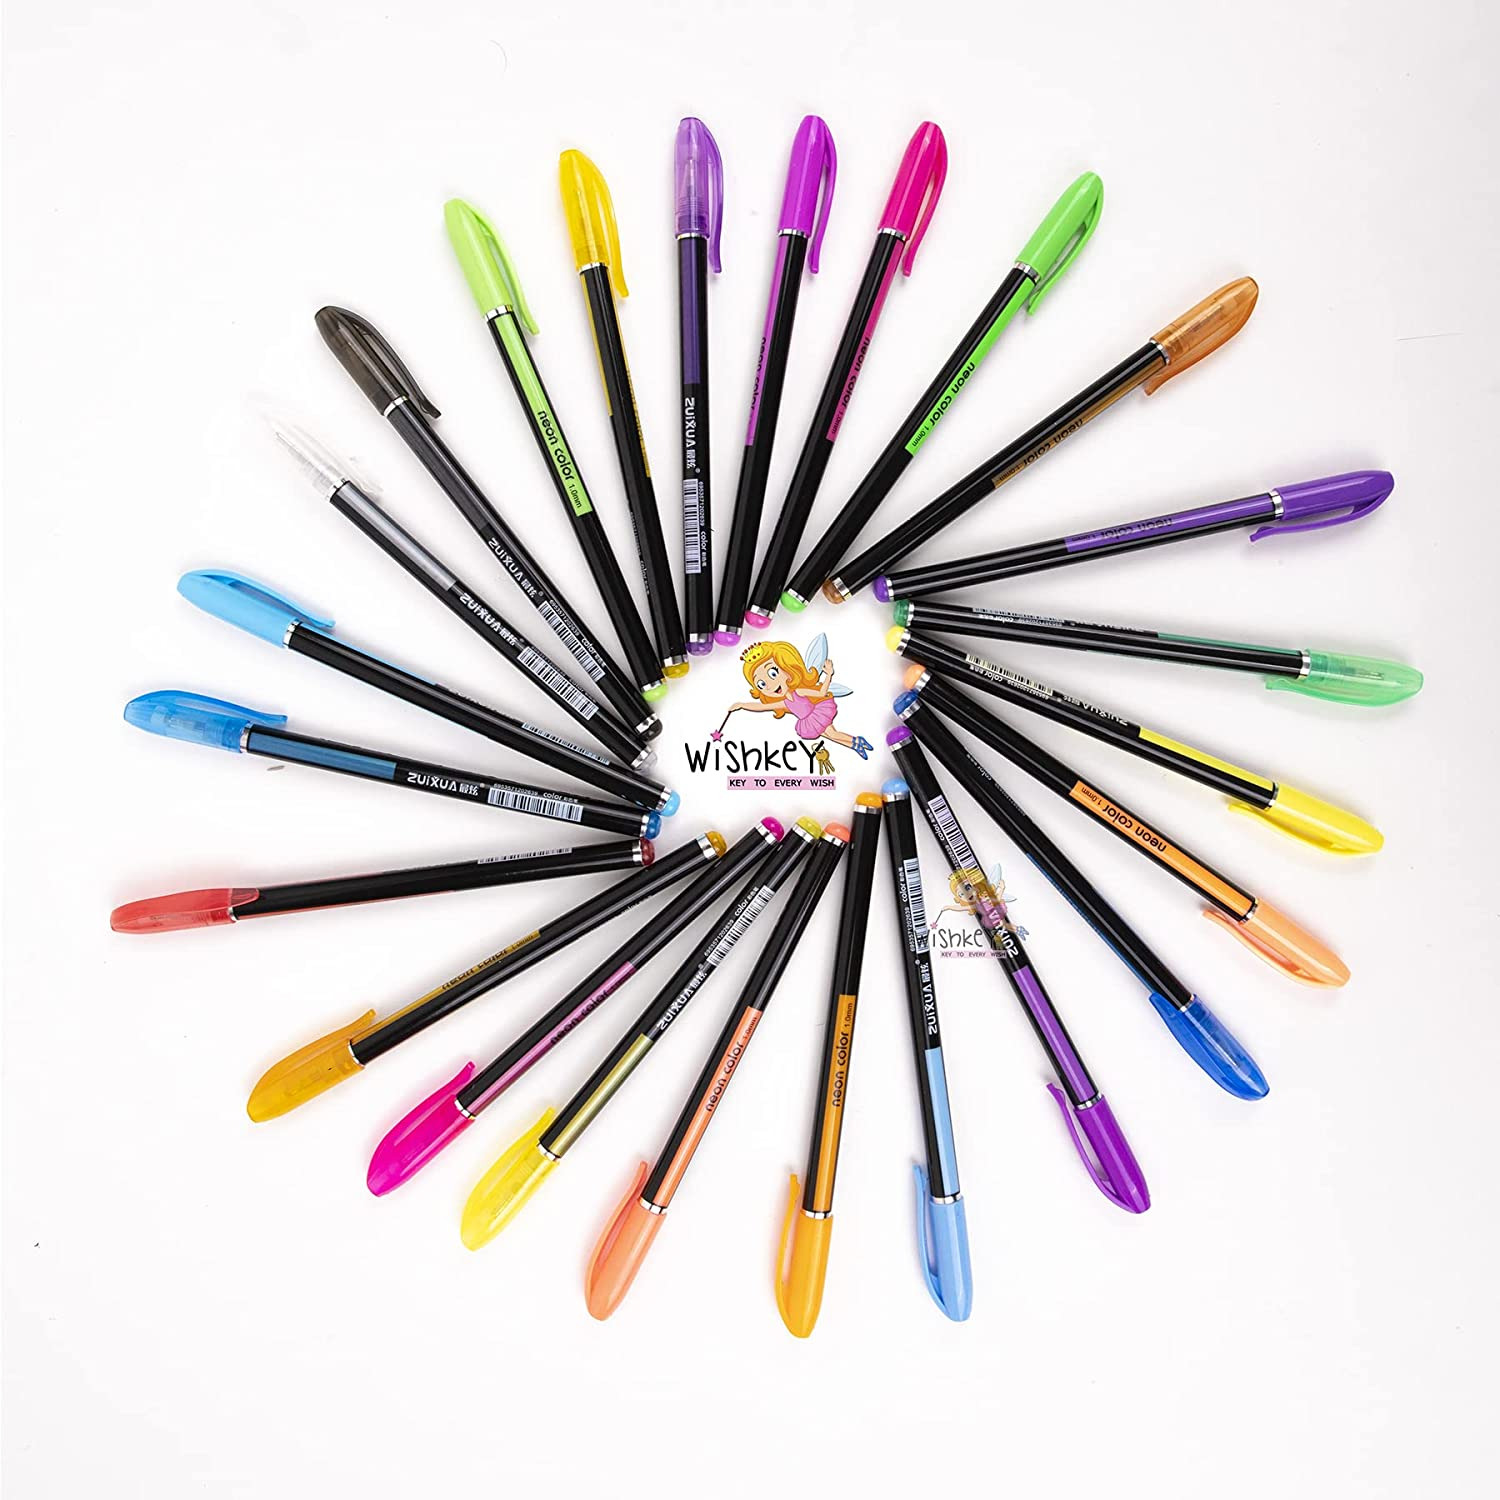 12 Plastic Neon Color Gel Pen Set Metallic Glitter PLUS Cartoon Shape  Pencil Box Having 12